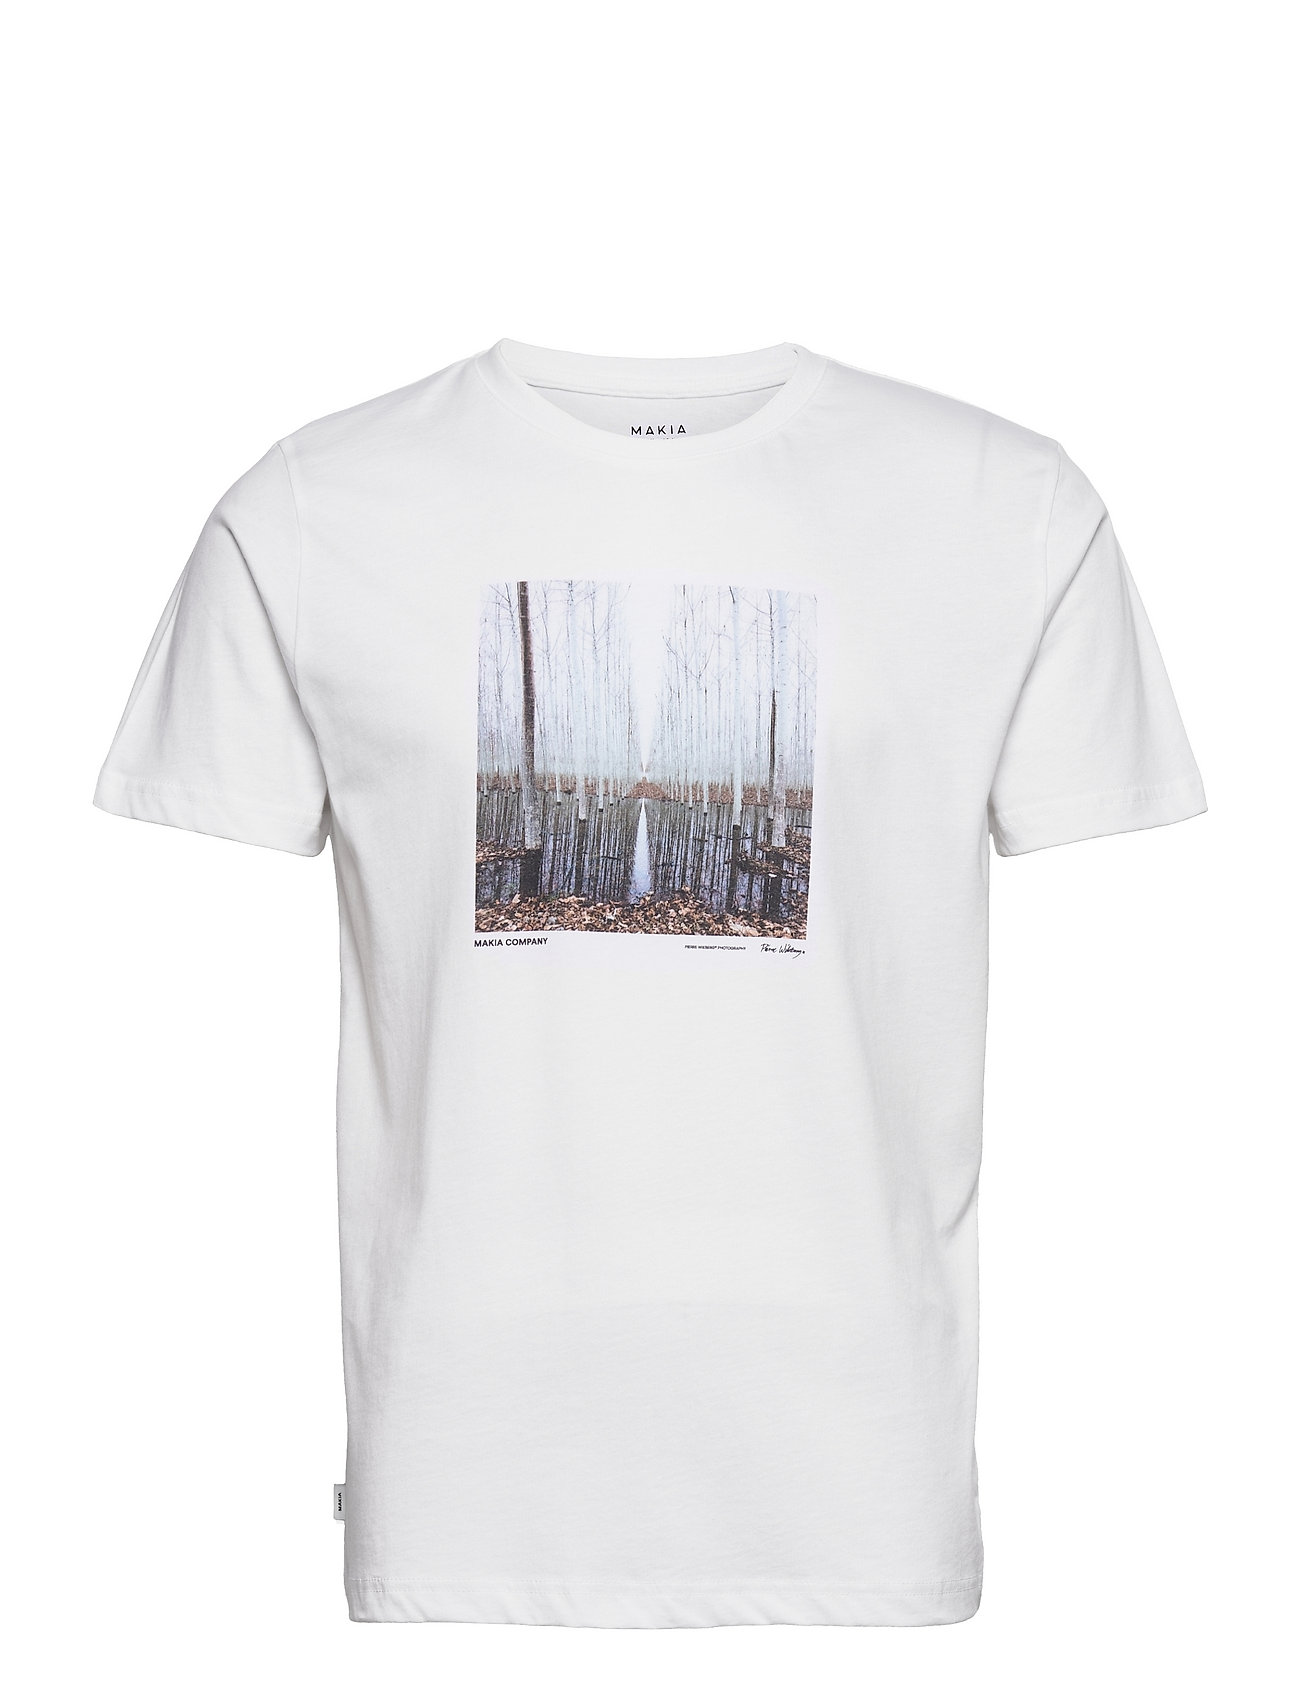 Corridor T-Shirt T-shirts Short-sleeved Valkoinen Makia